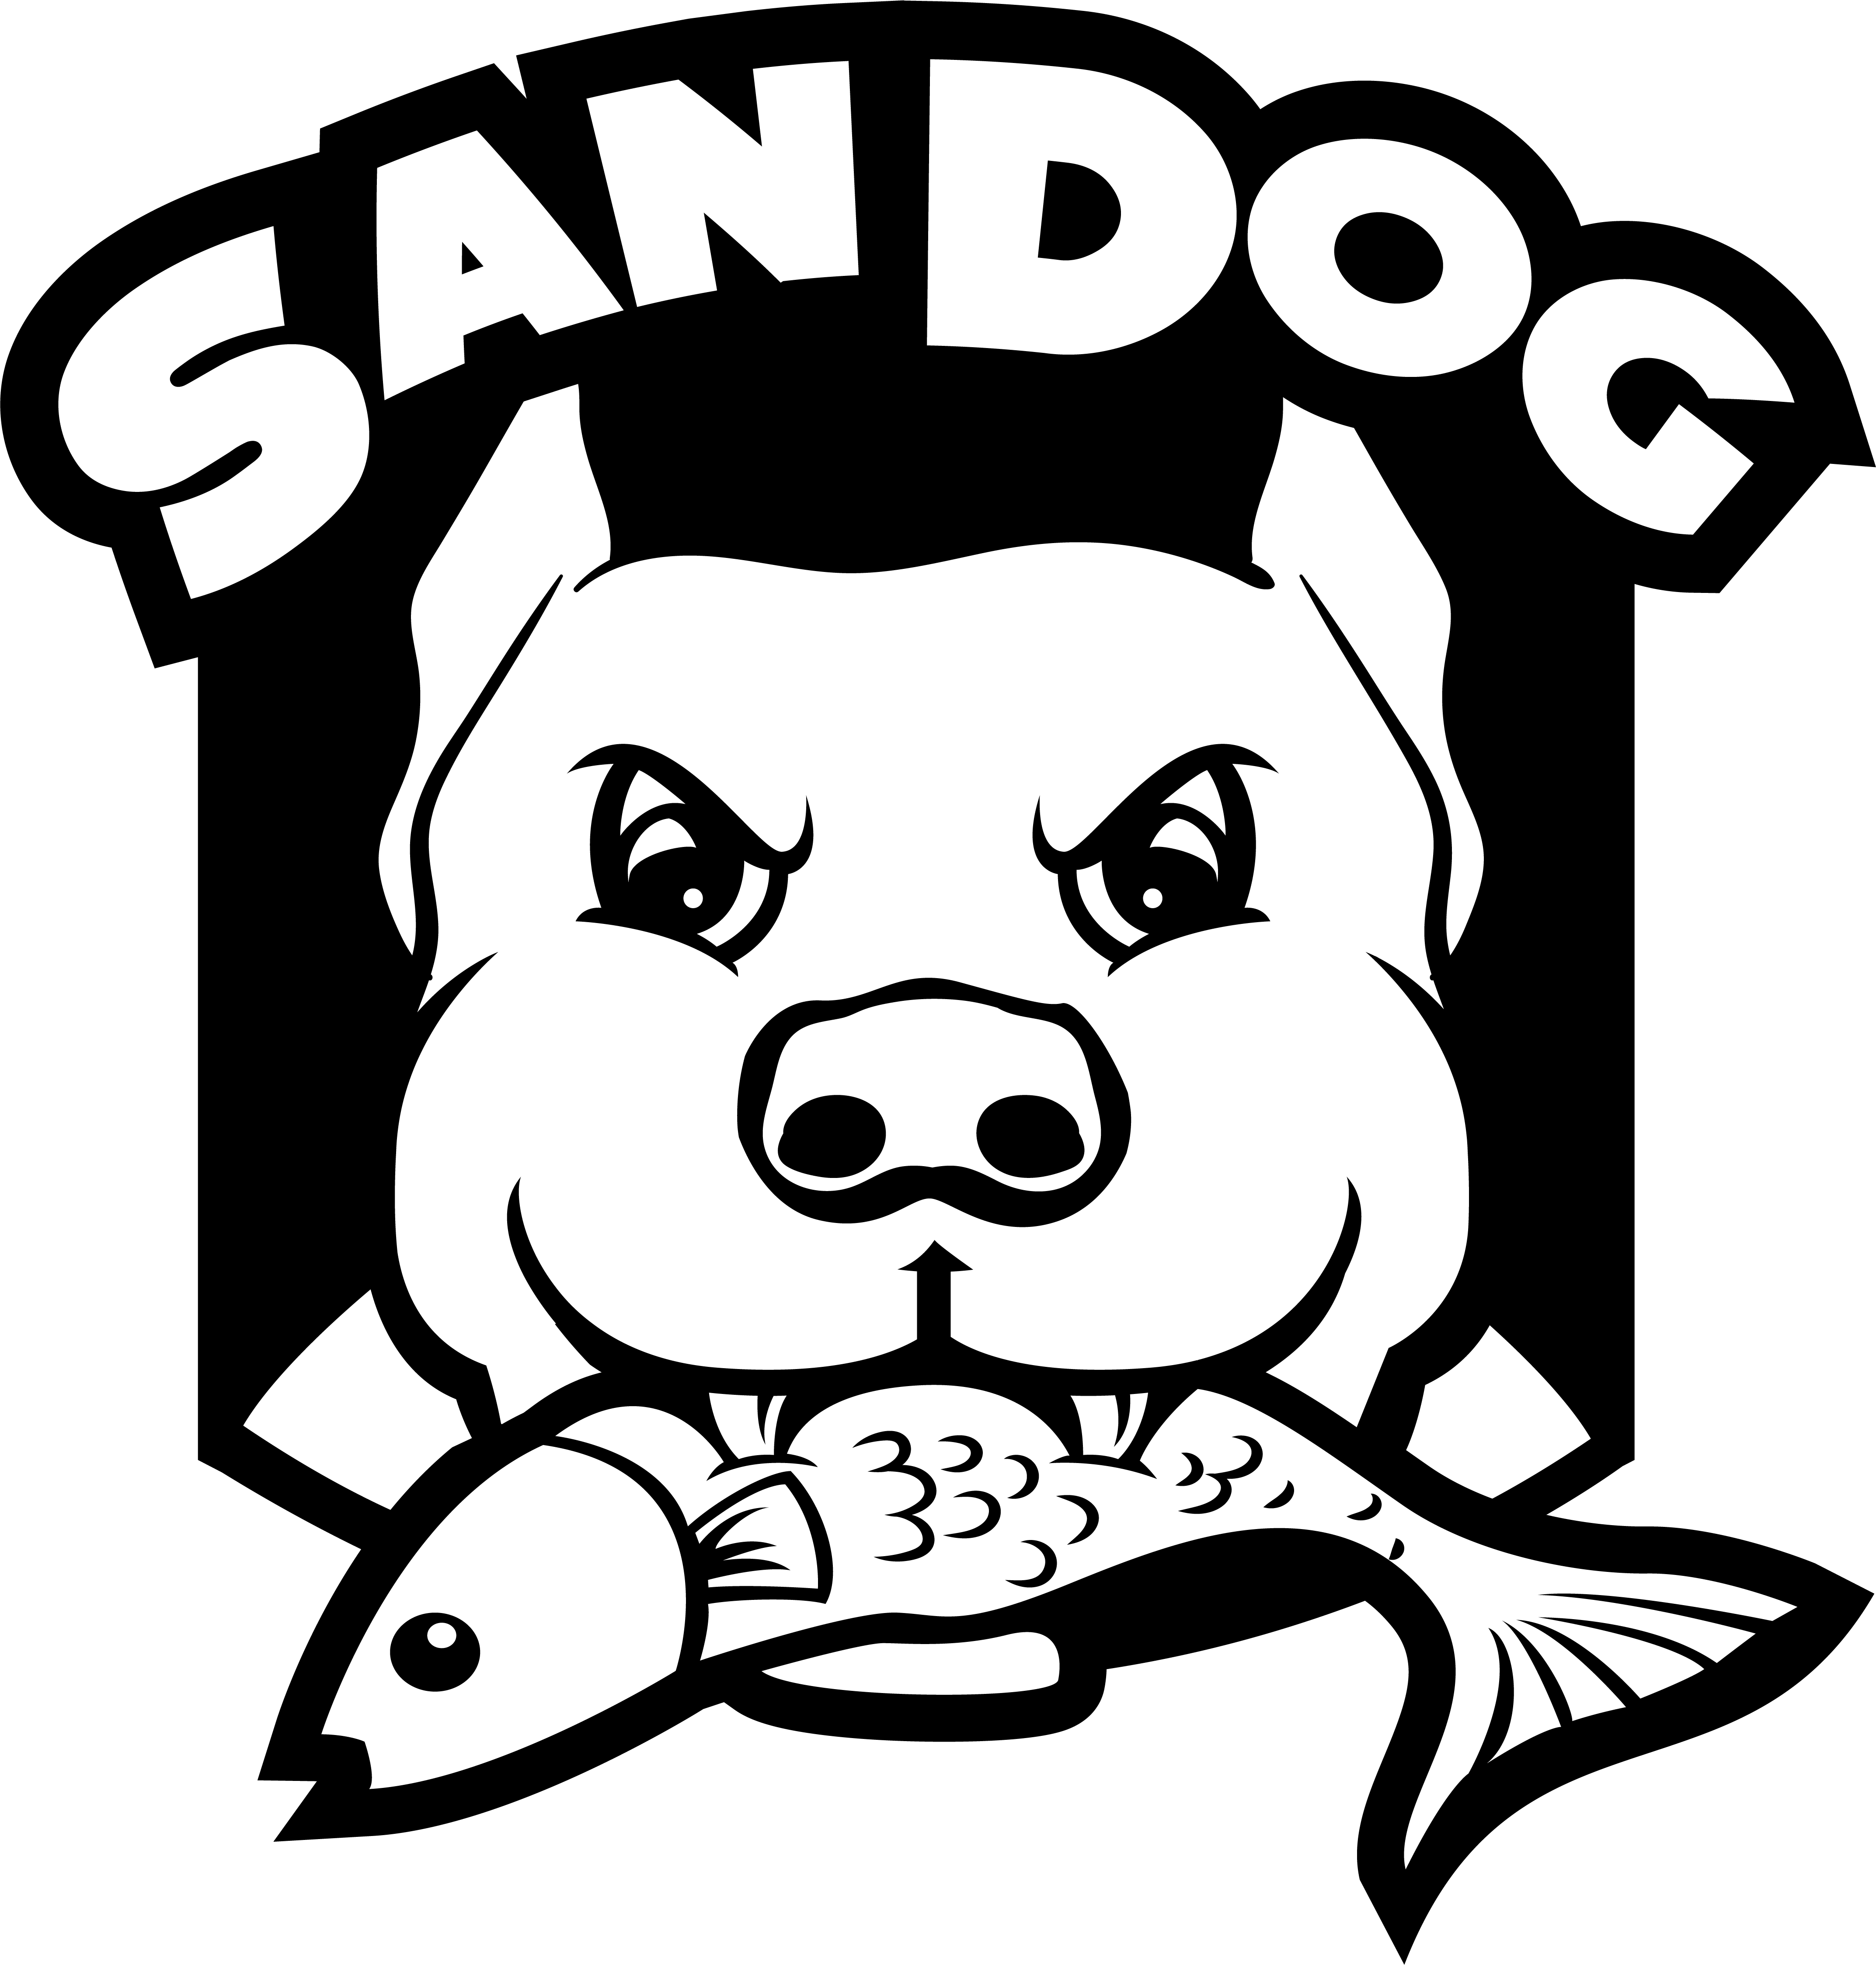 San Dog Kayak Adventure logo